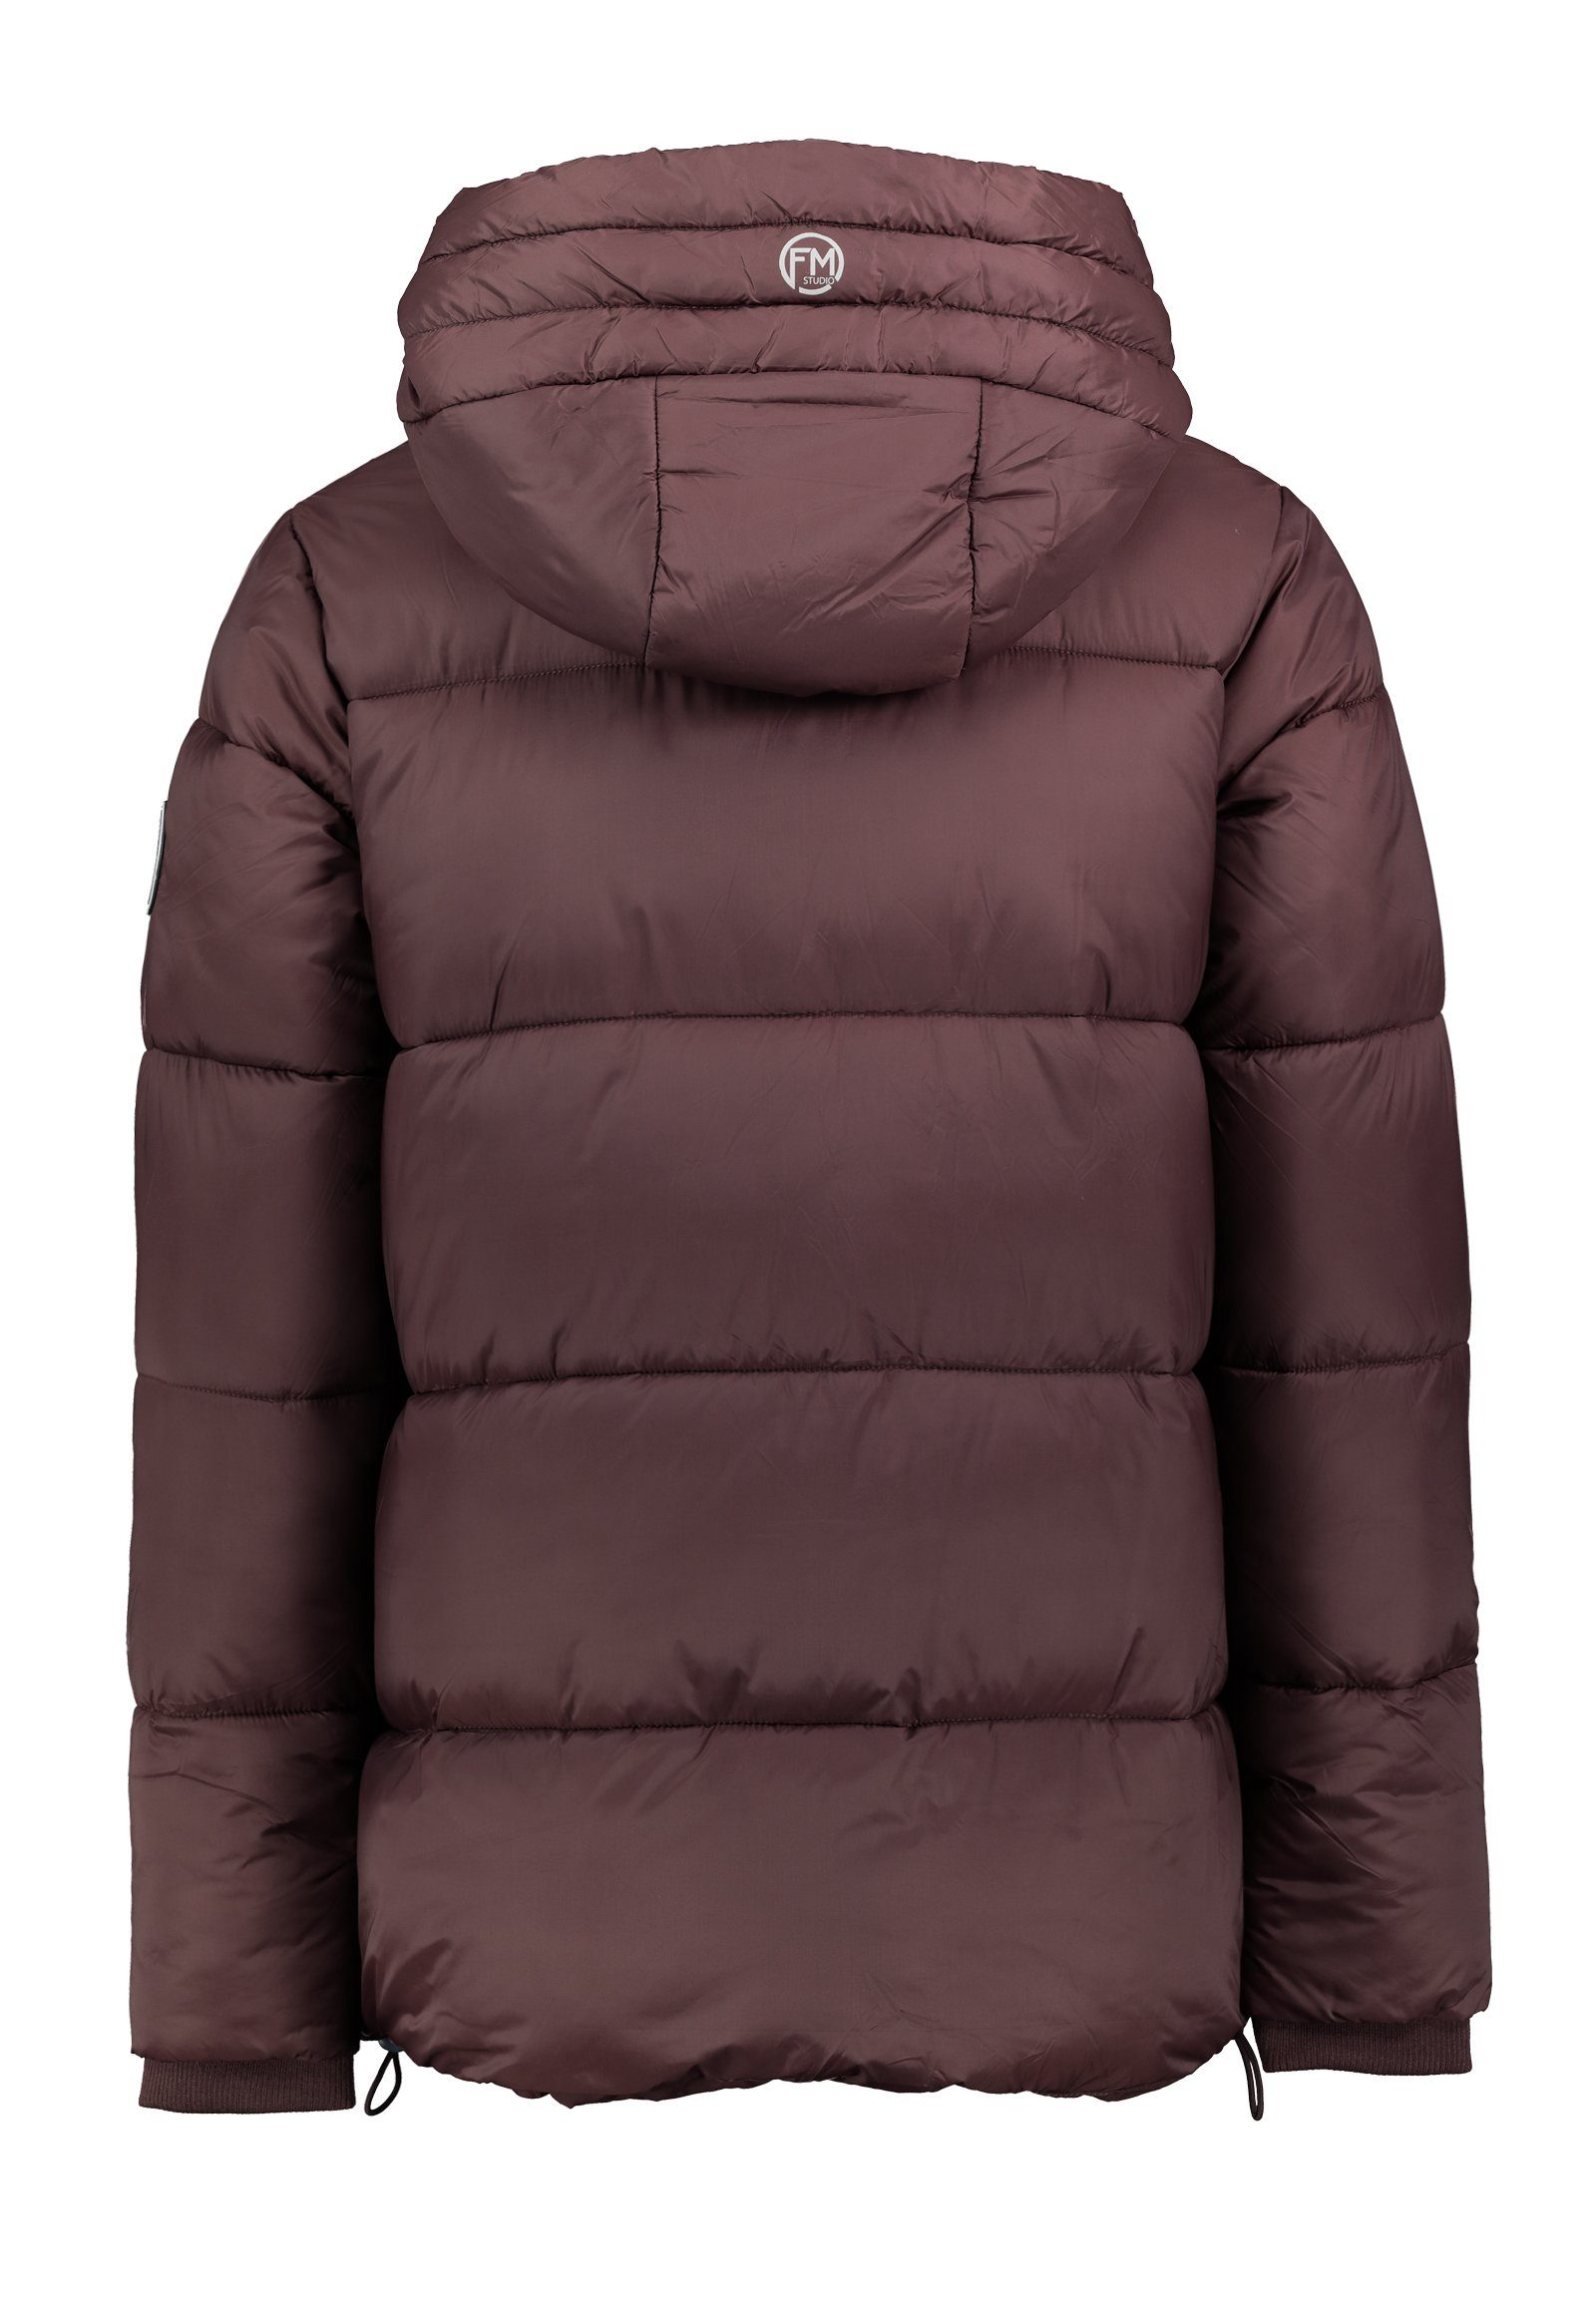 Jacke Damen Kapuze Winterjacke Fresh Stehkragen Made Gesteppt Braun Winter Parka Stepp Steppjacke